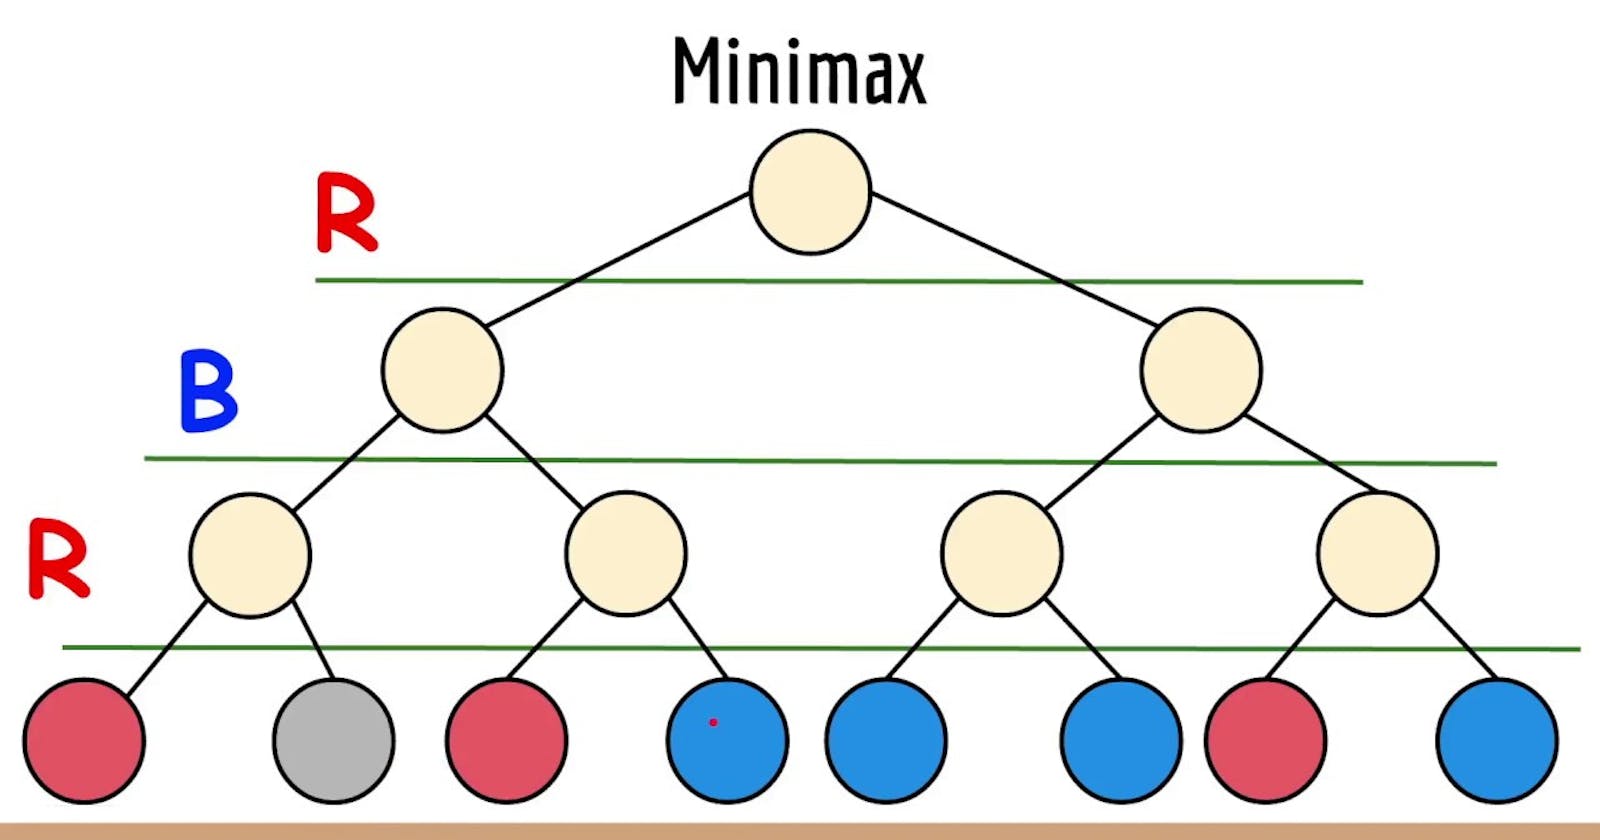 MINIMAX Algorithm